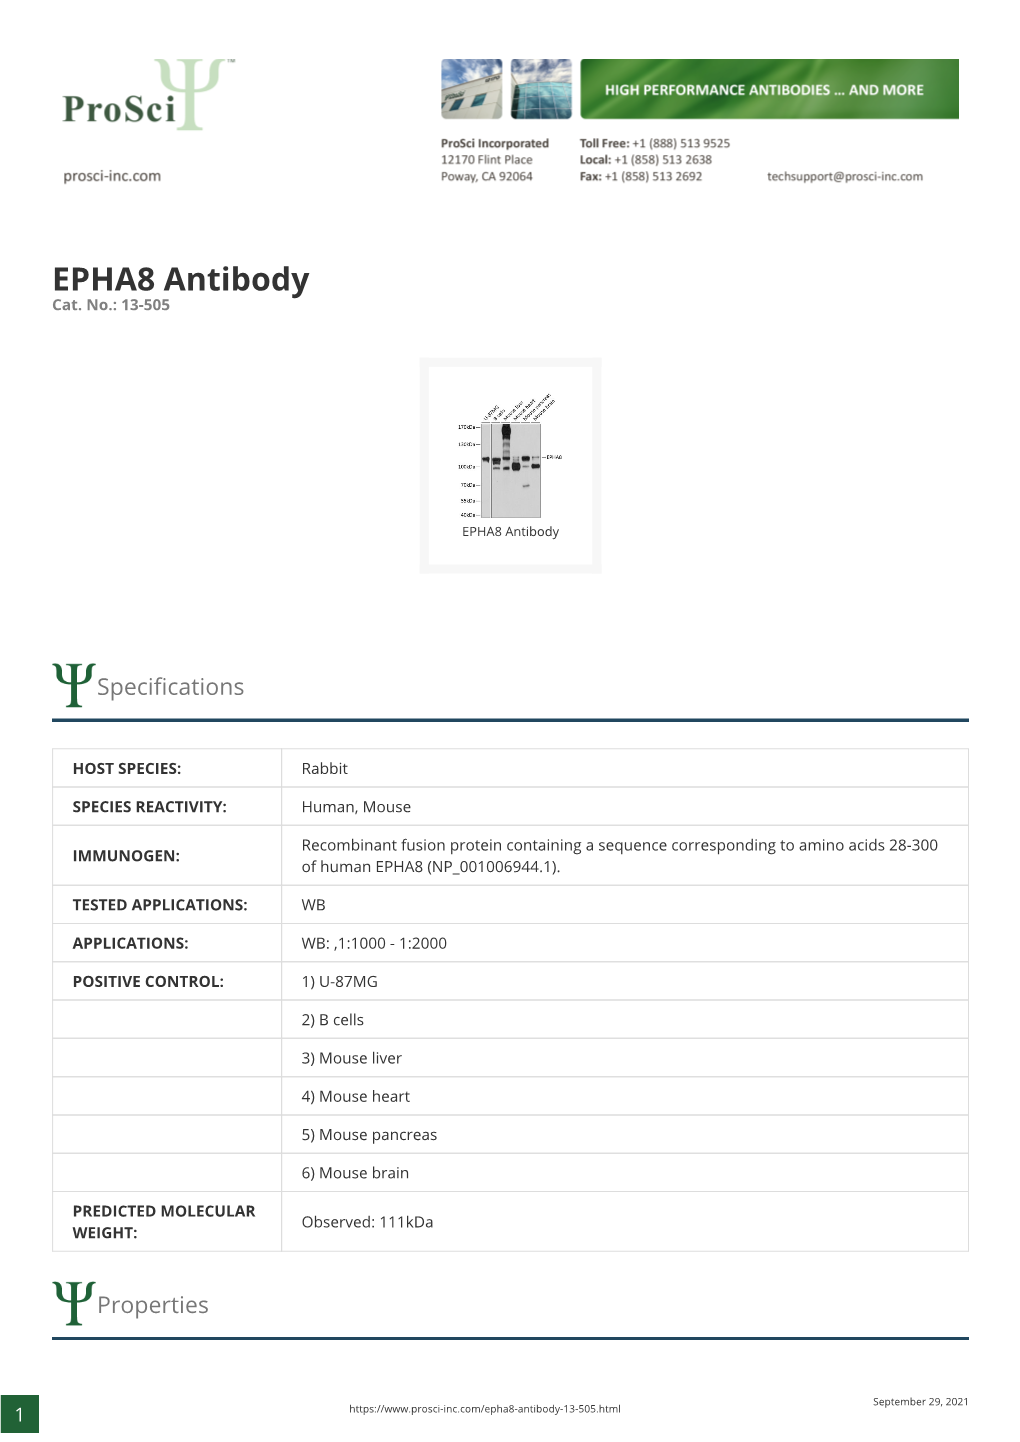 EPHA8 Antibody Cat